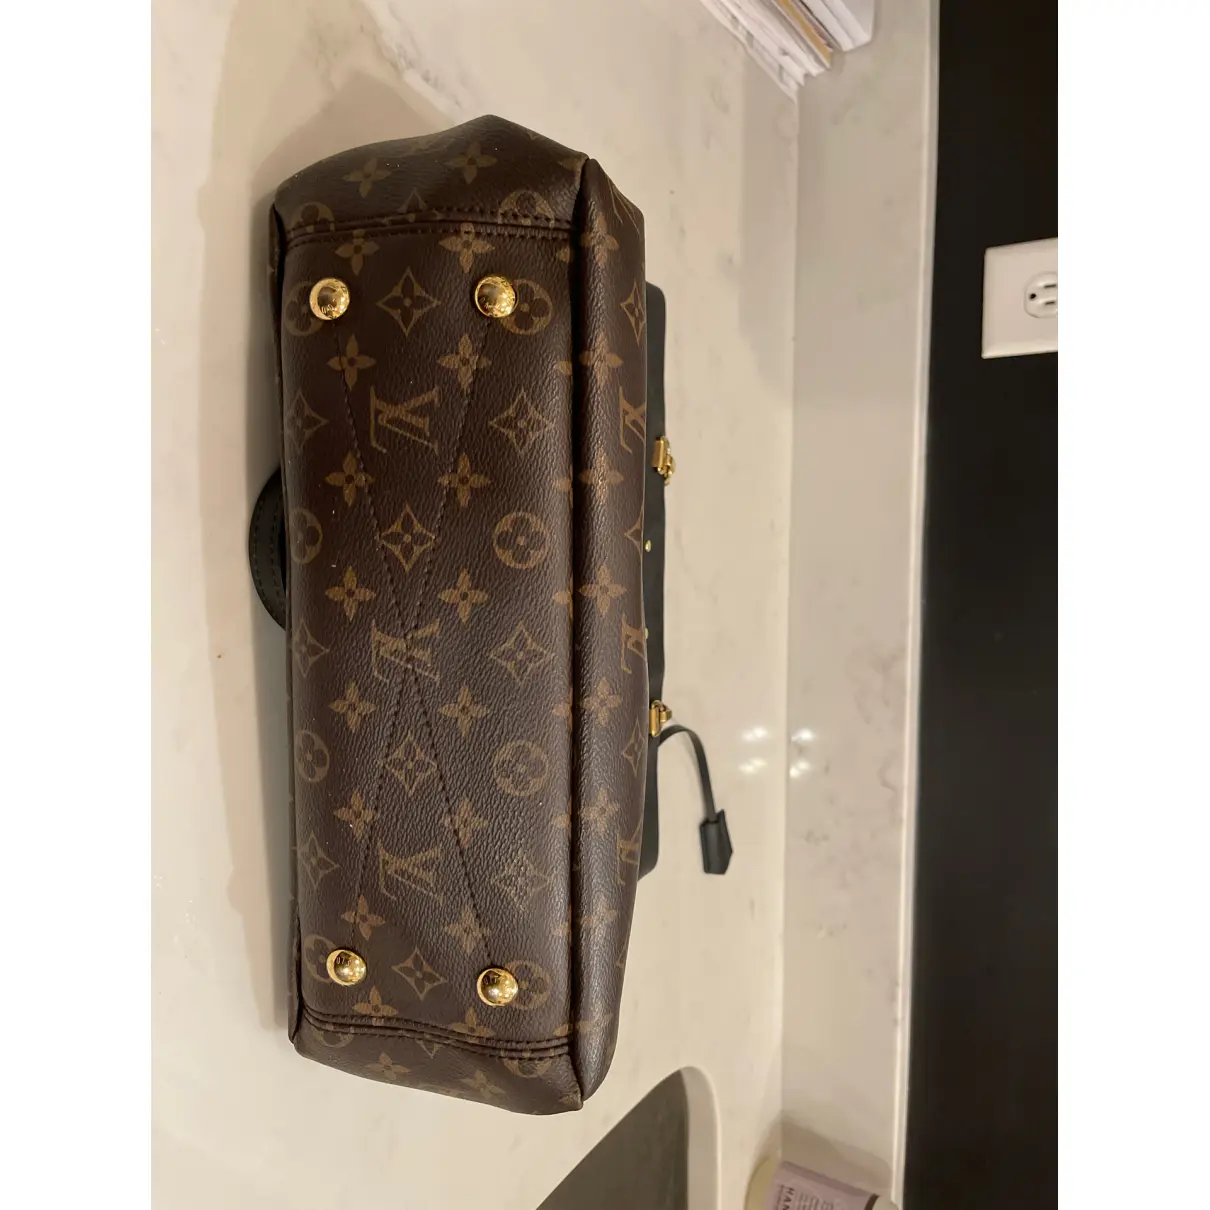 Pallas leather handbag Louis Vuitton